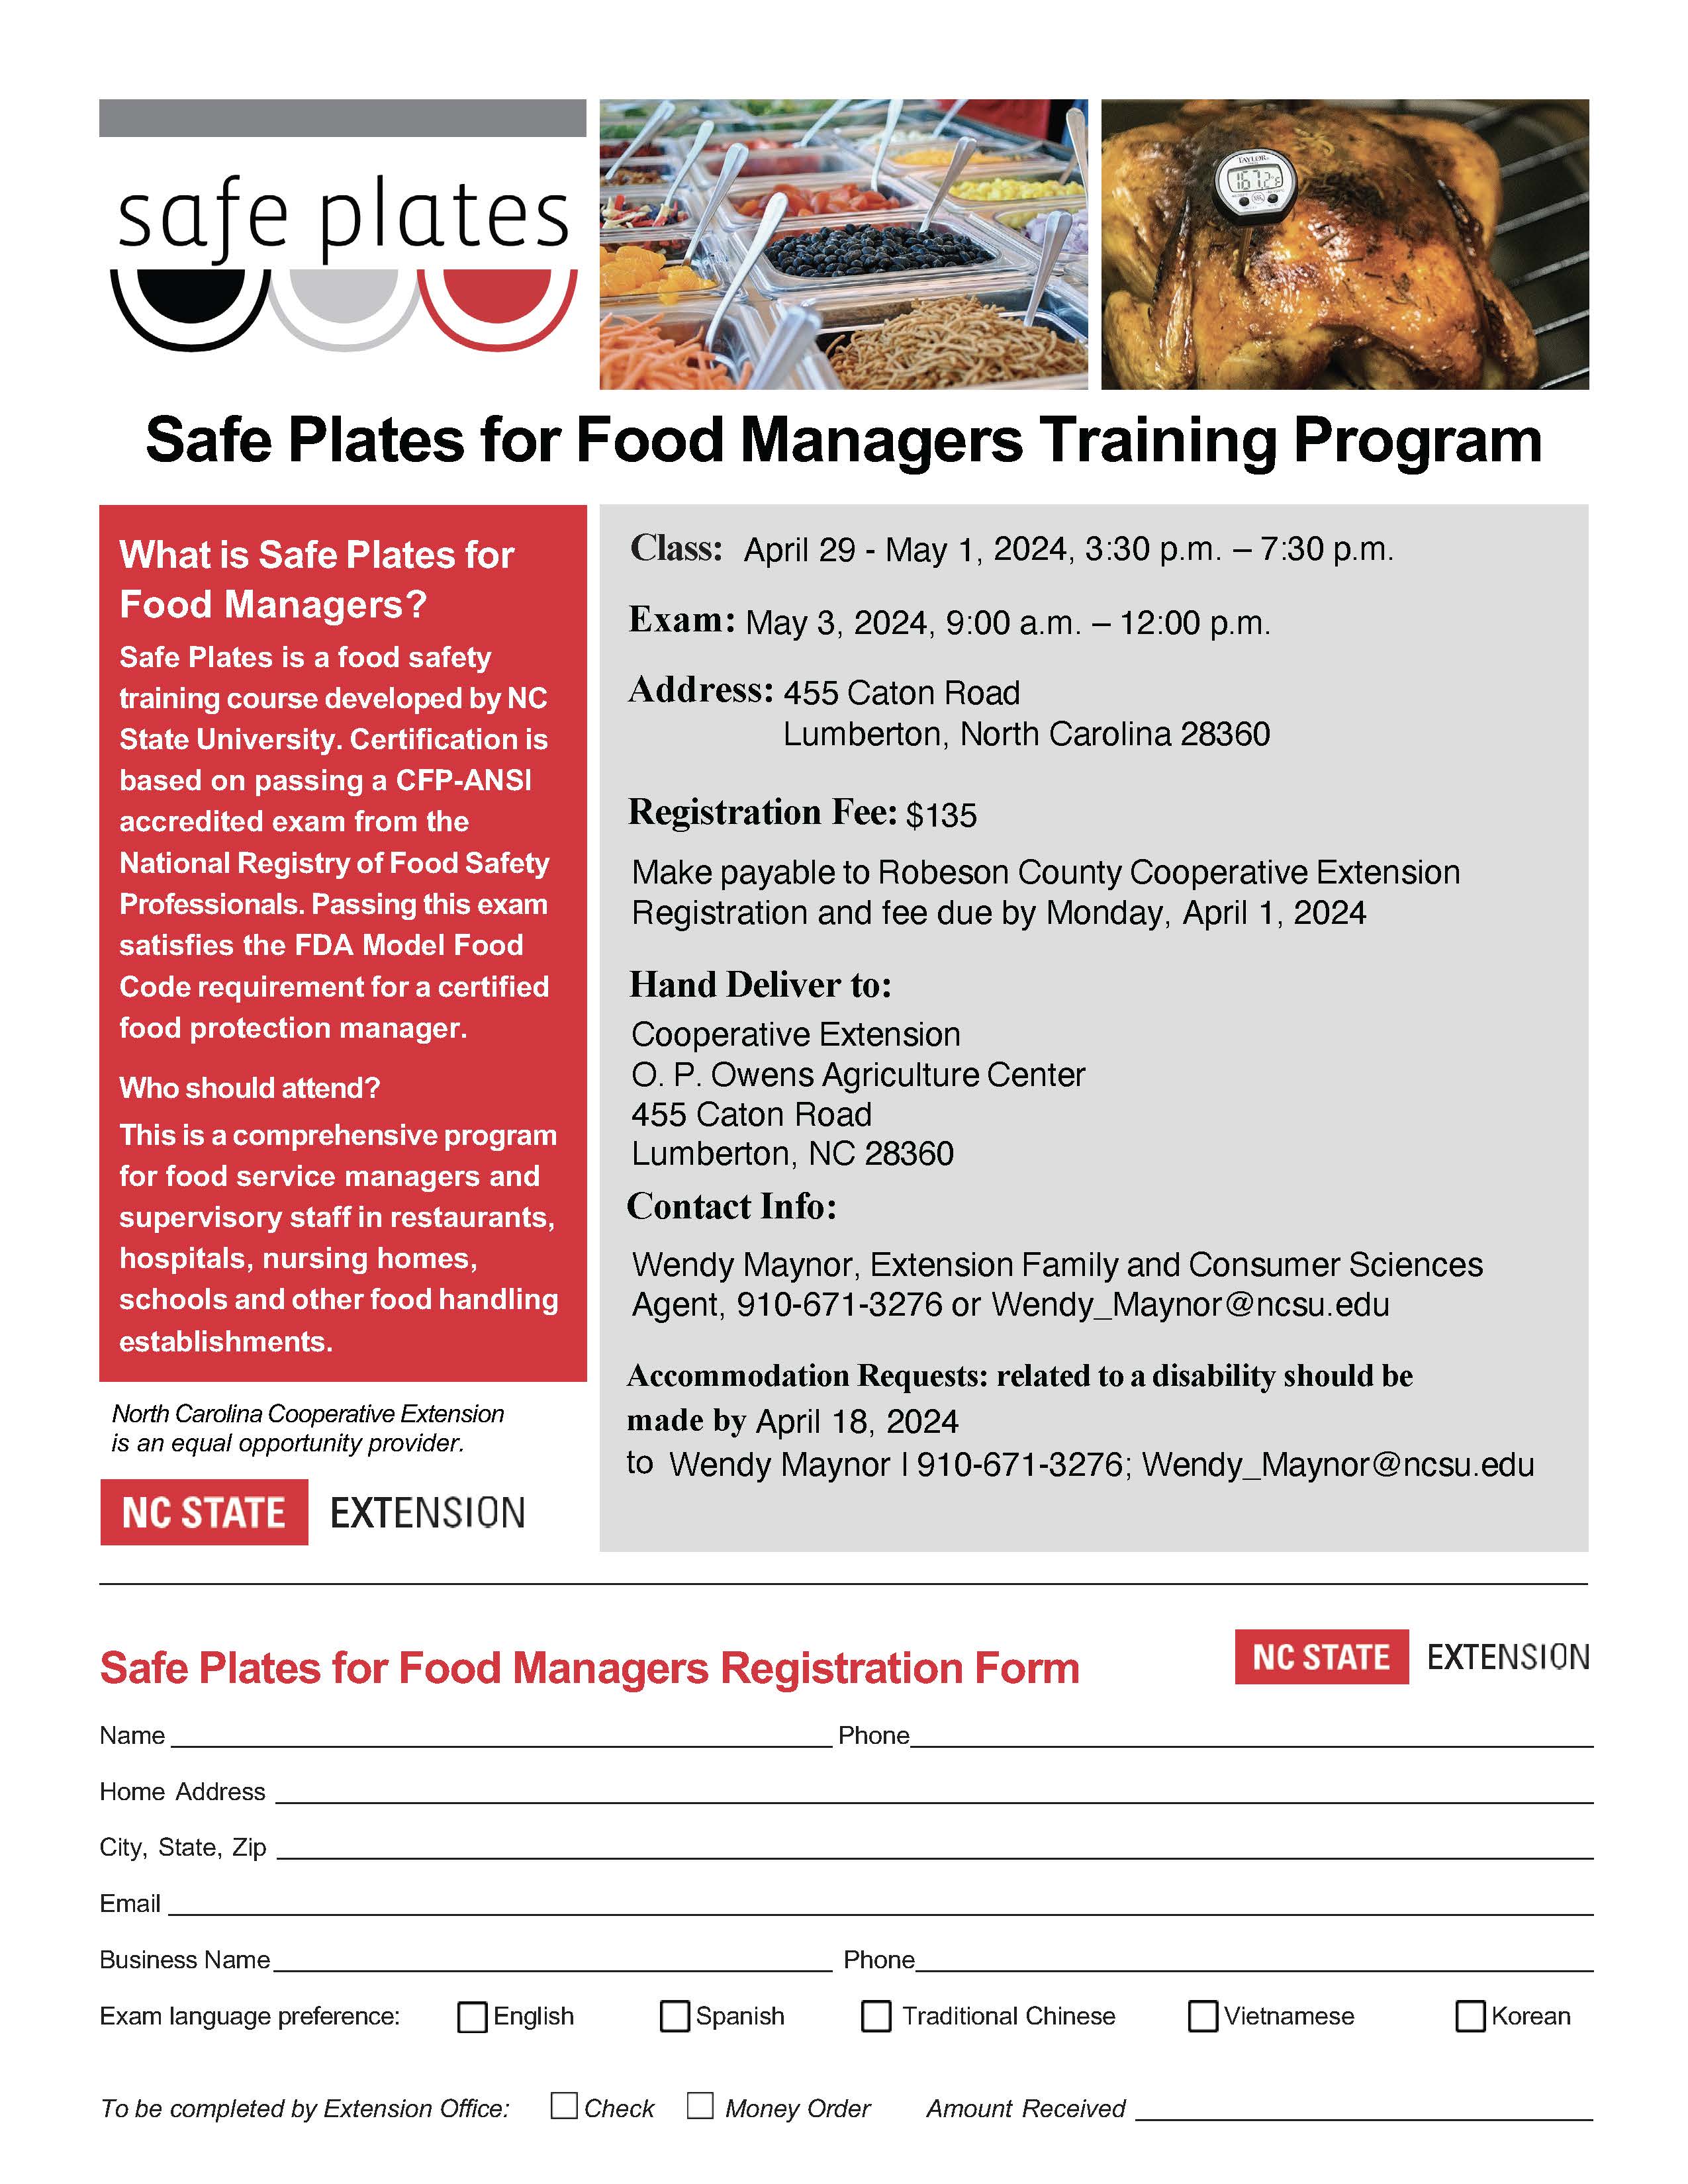 safe plates Training Program form